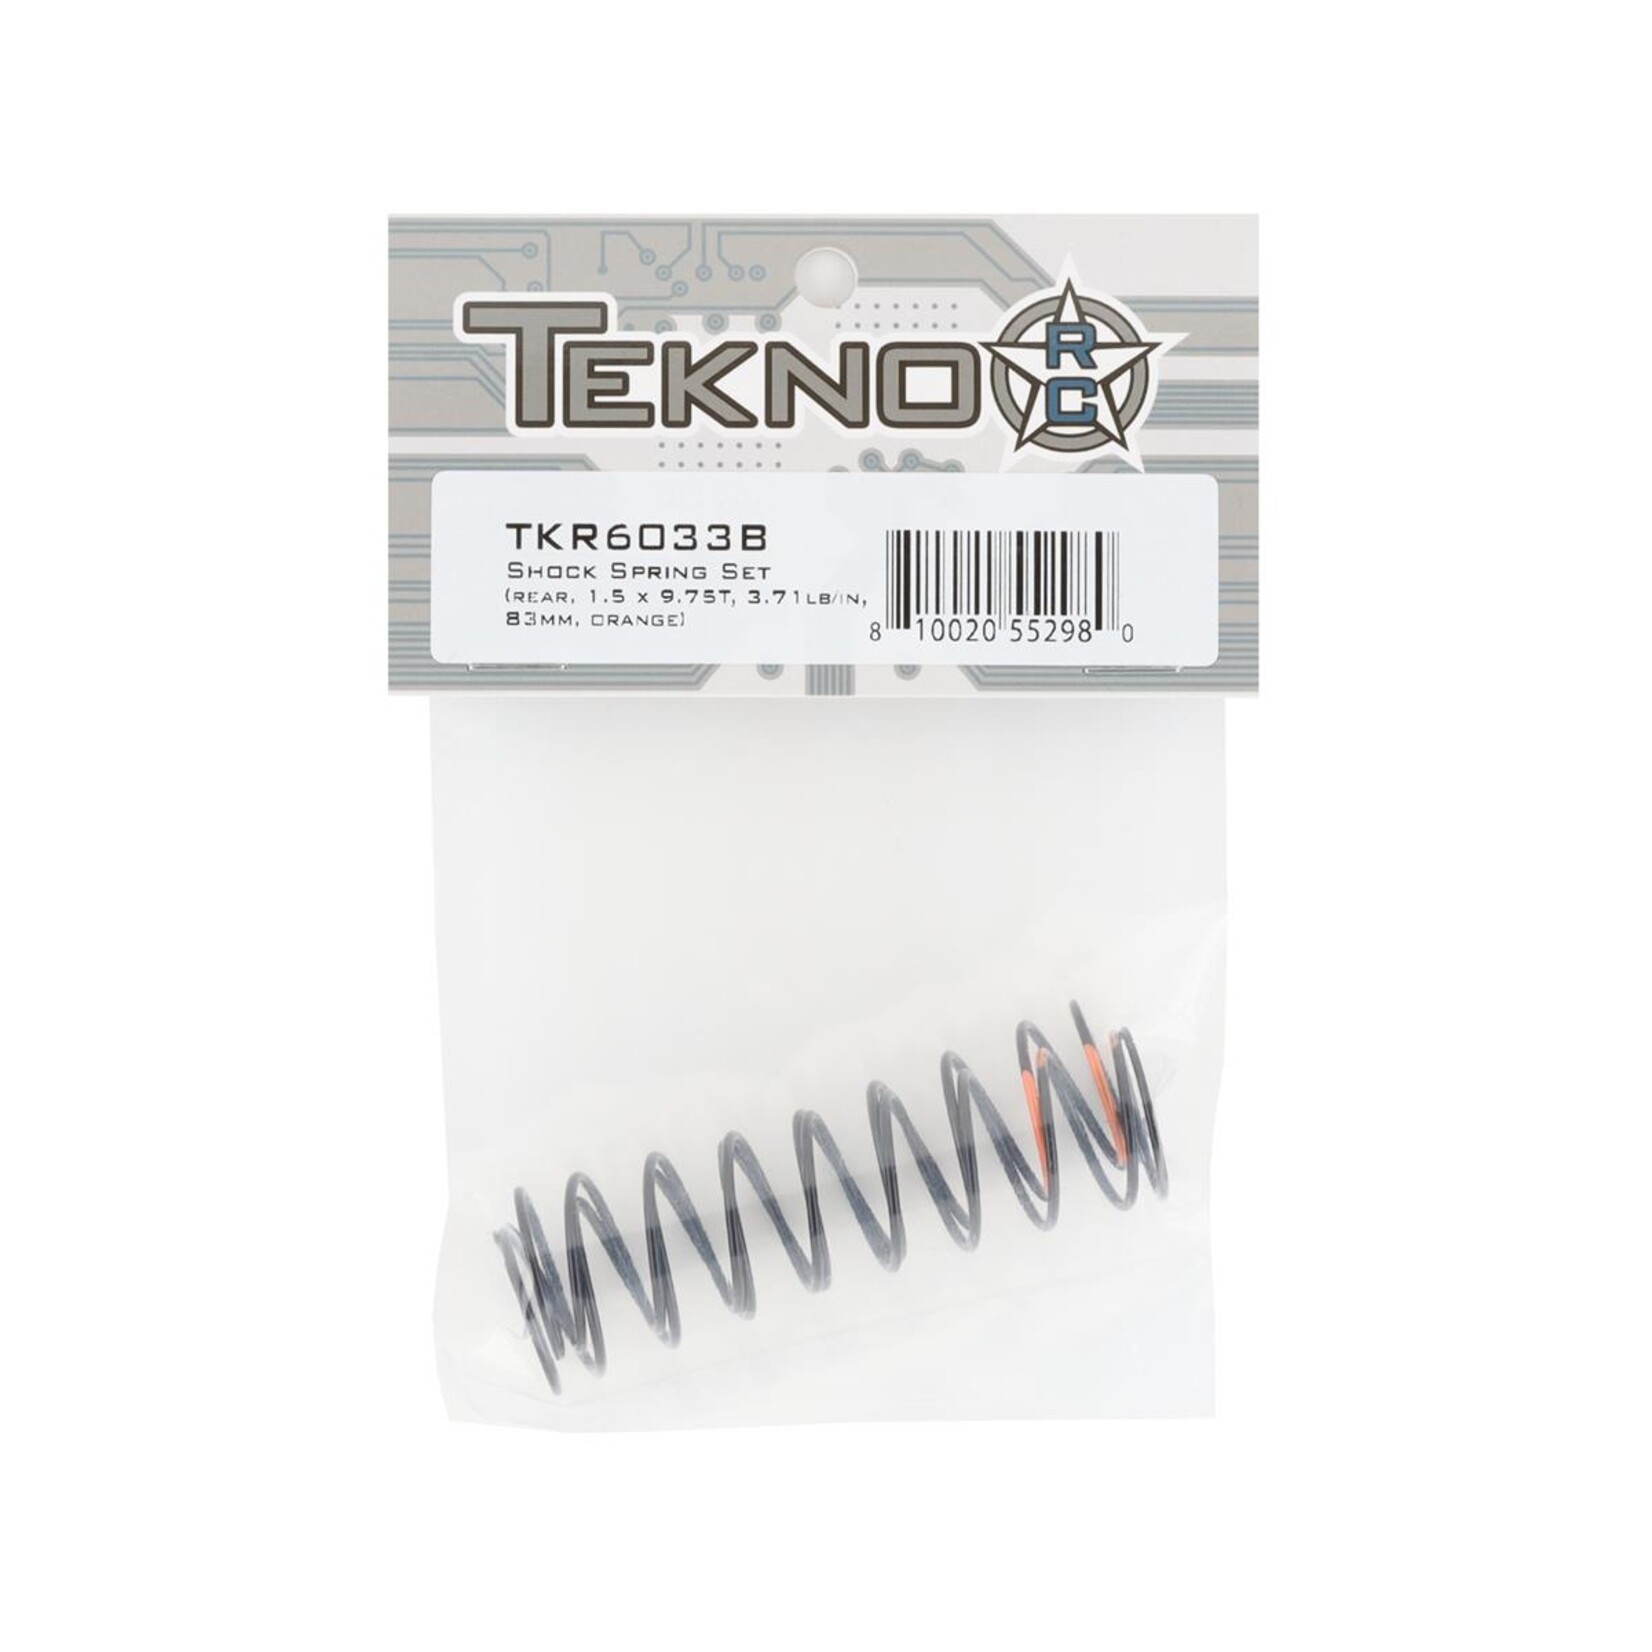 Tekno RC Tekno RC 83mm Rear Shock Spring Set (Orange) (1.5 x 9.75T) (2) #TKR6033B